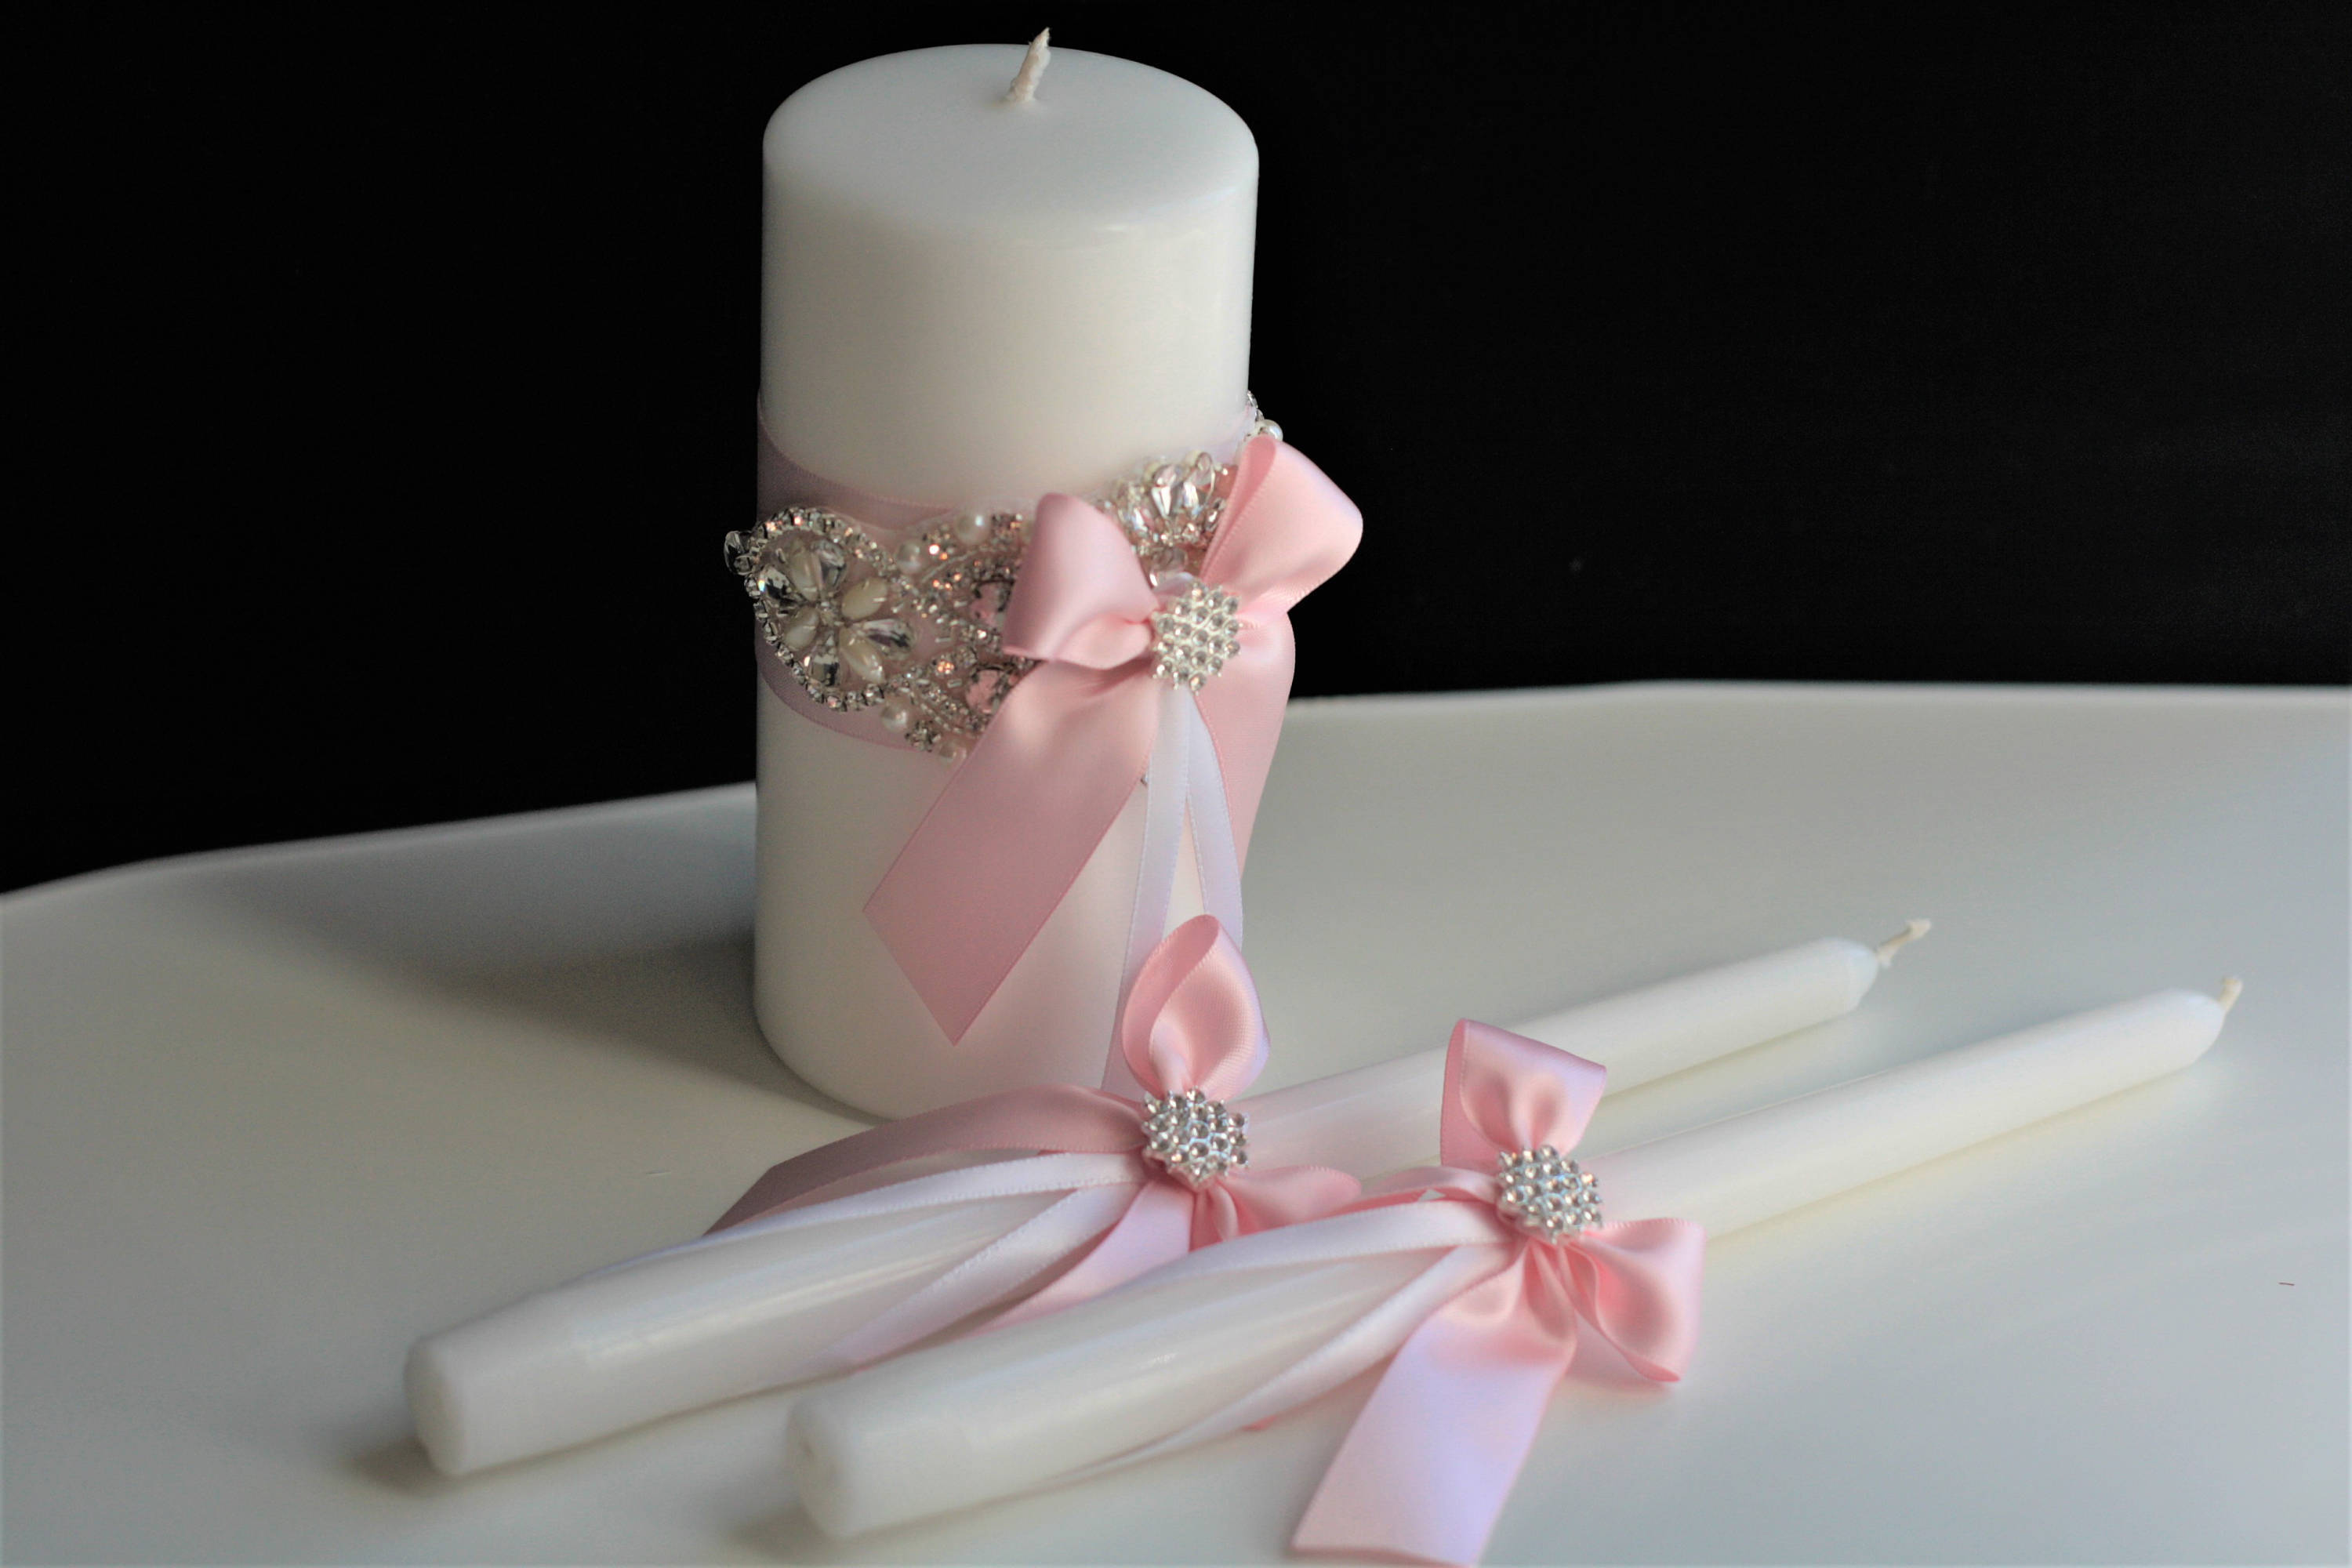 wedding candles